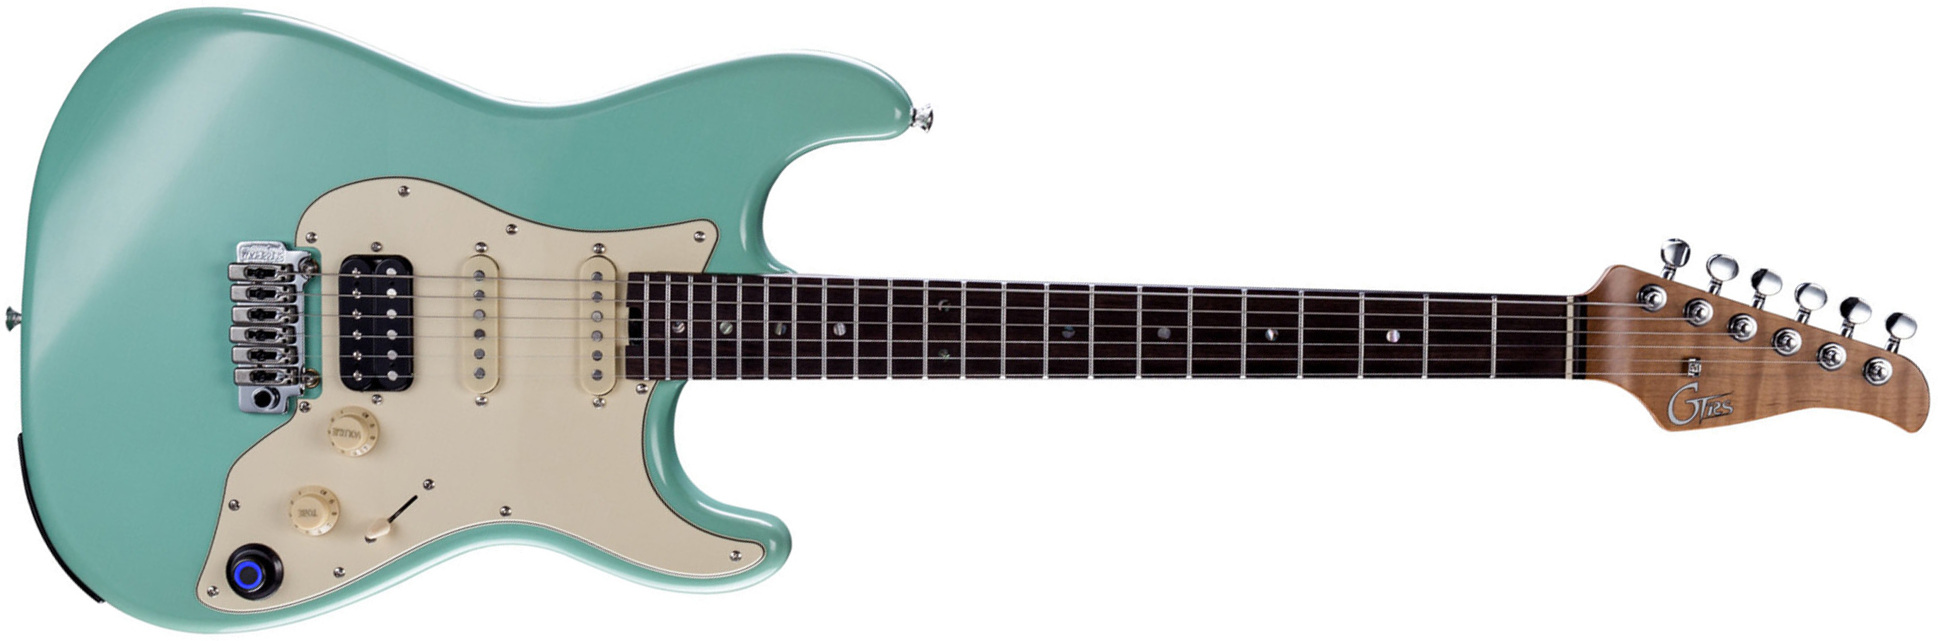 Mooer Gtrs P800 Pro Intelligent Guitar Hss Trem Rw - Mint Green - Guitarra eléctrica de modelización - Main picture